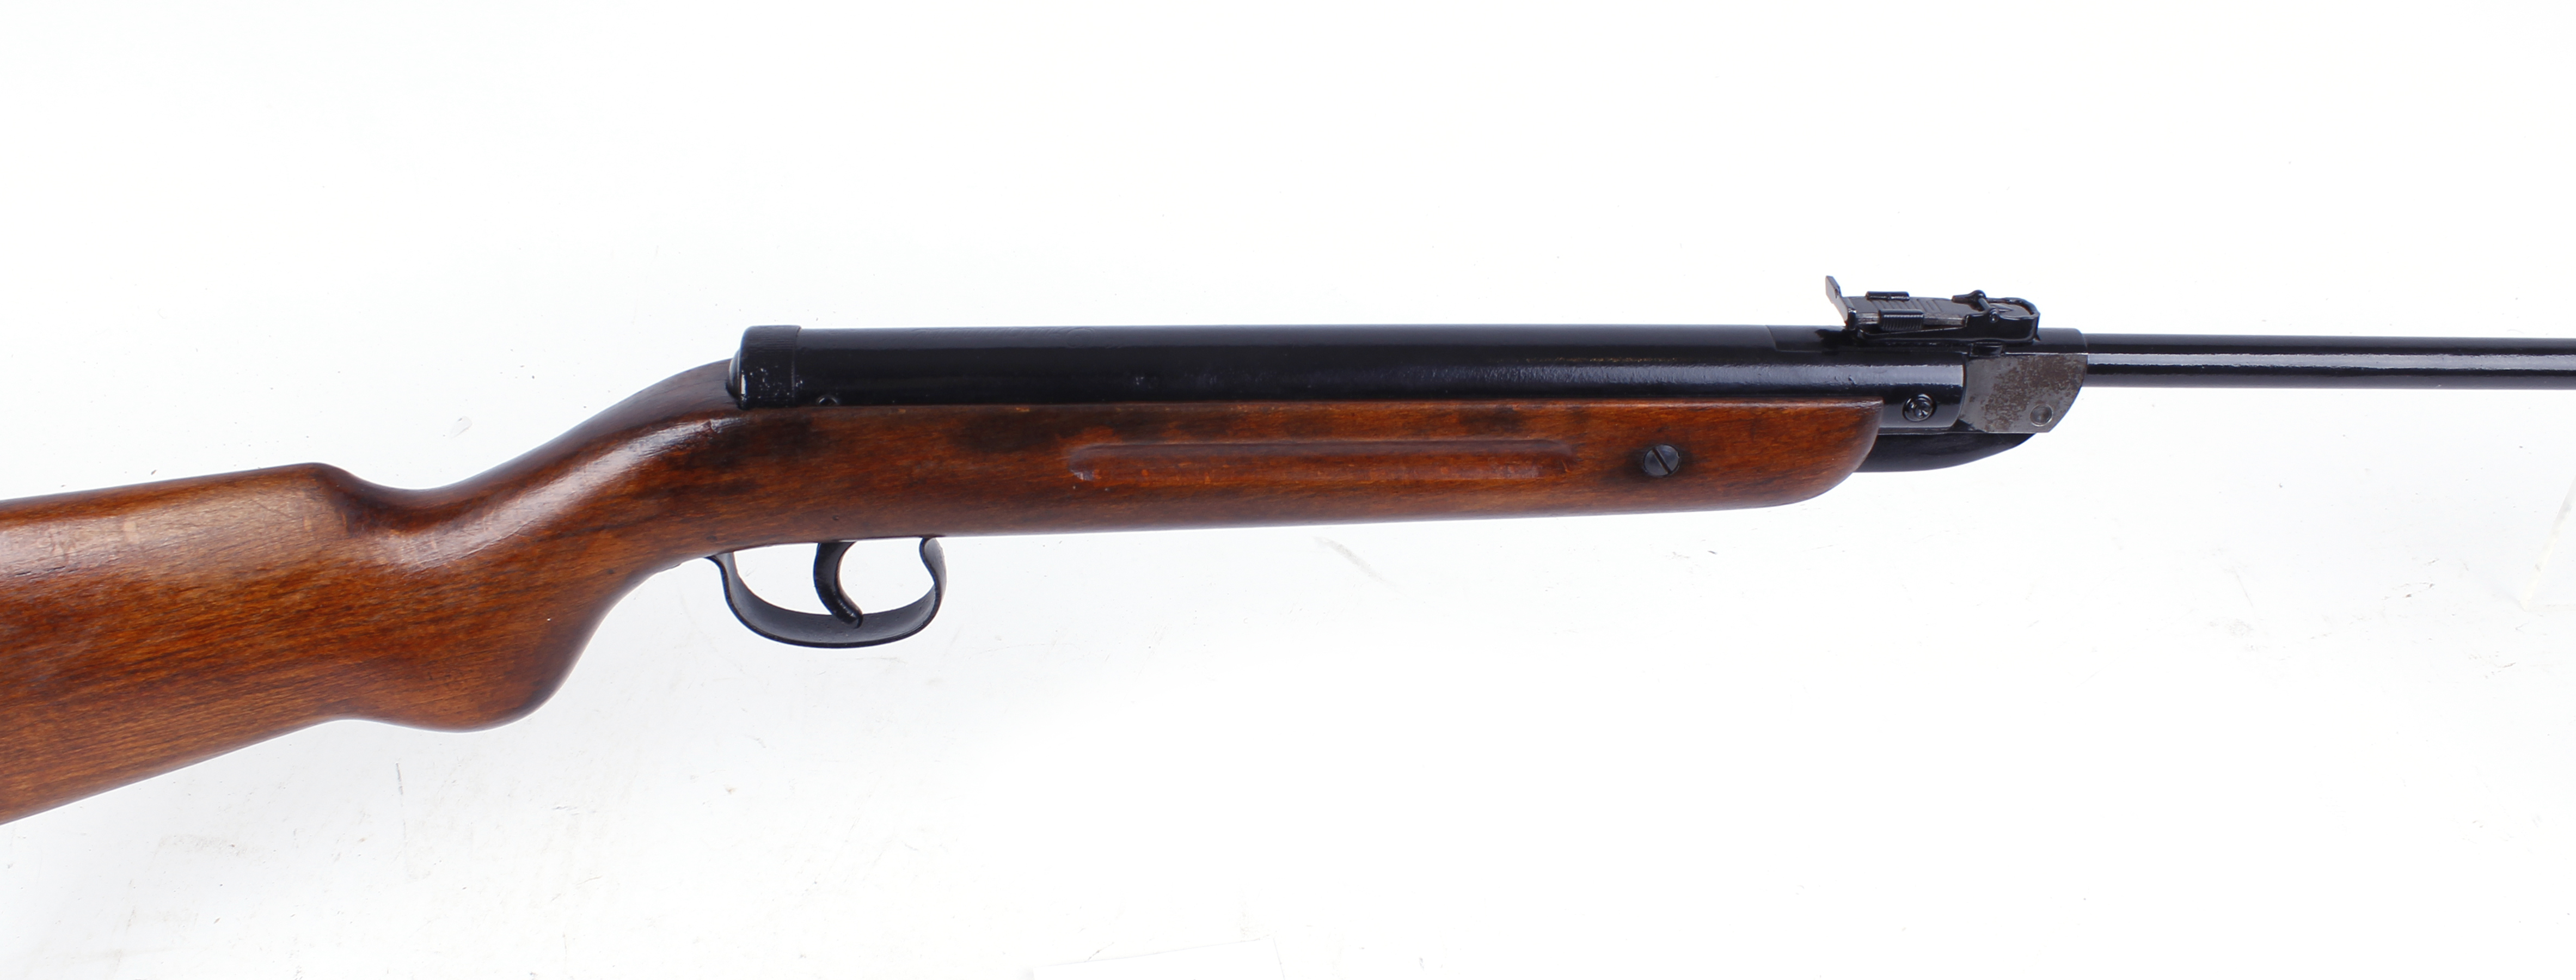 .177 Original Model 23 break barrel air rifle